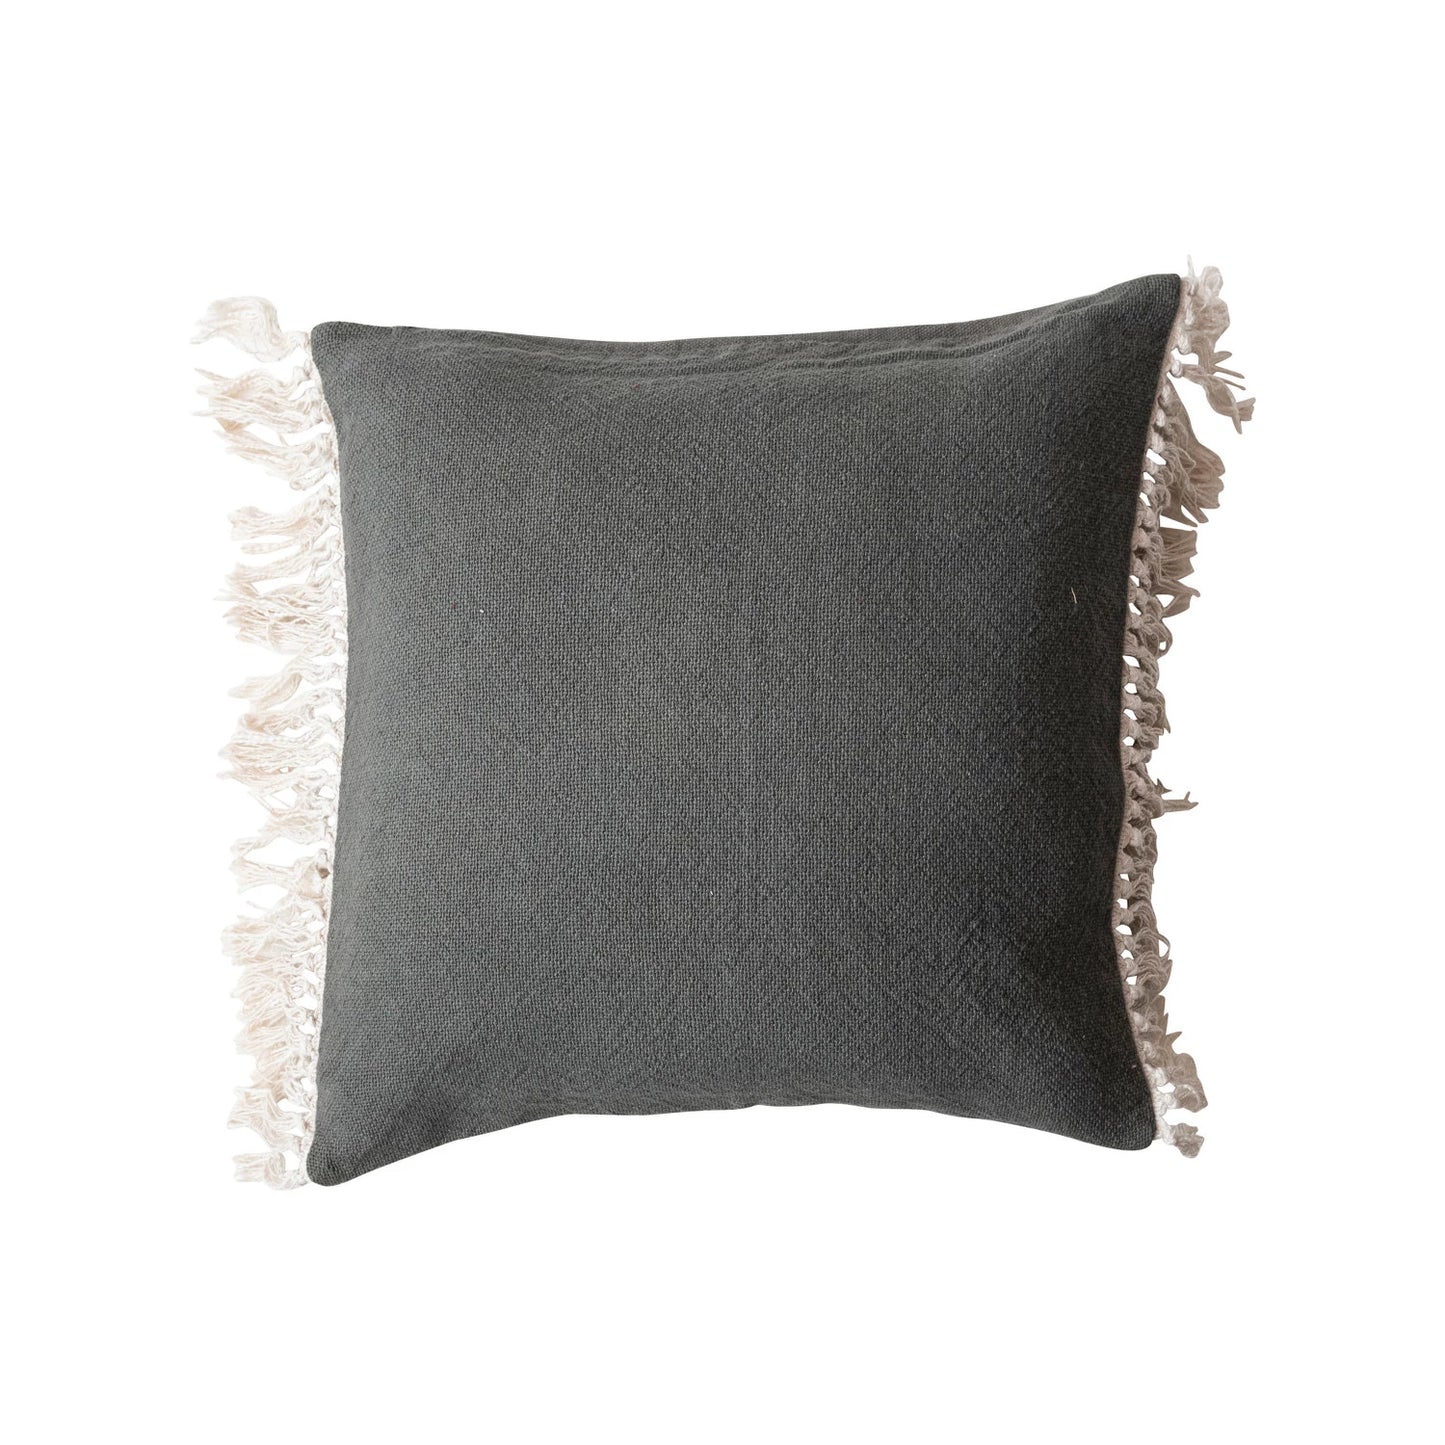 Grey Fringe Pillow, The Feathered Farmhouse